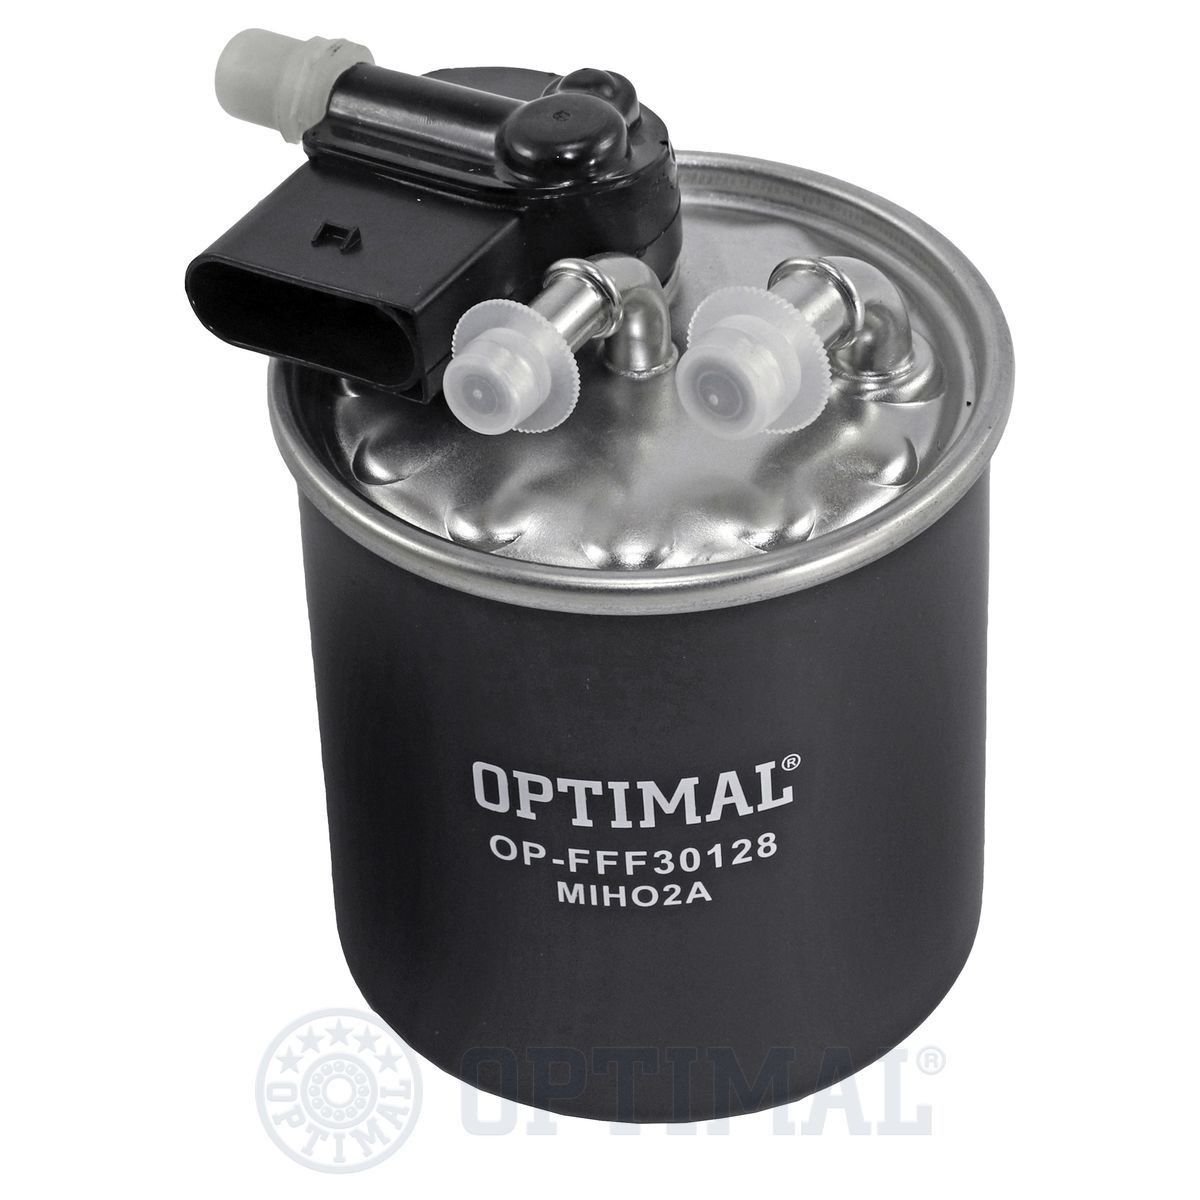 OPTIMAL OP-FFF30128 Fuel filter A 6420906552